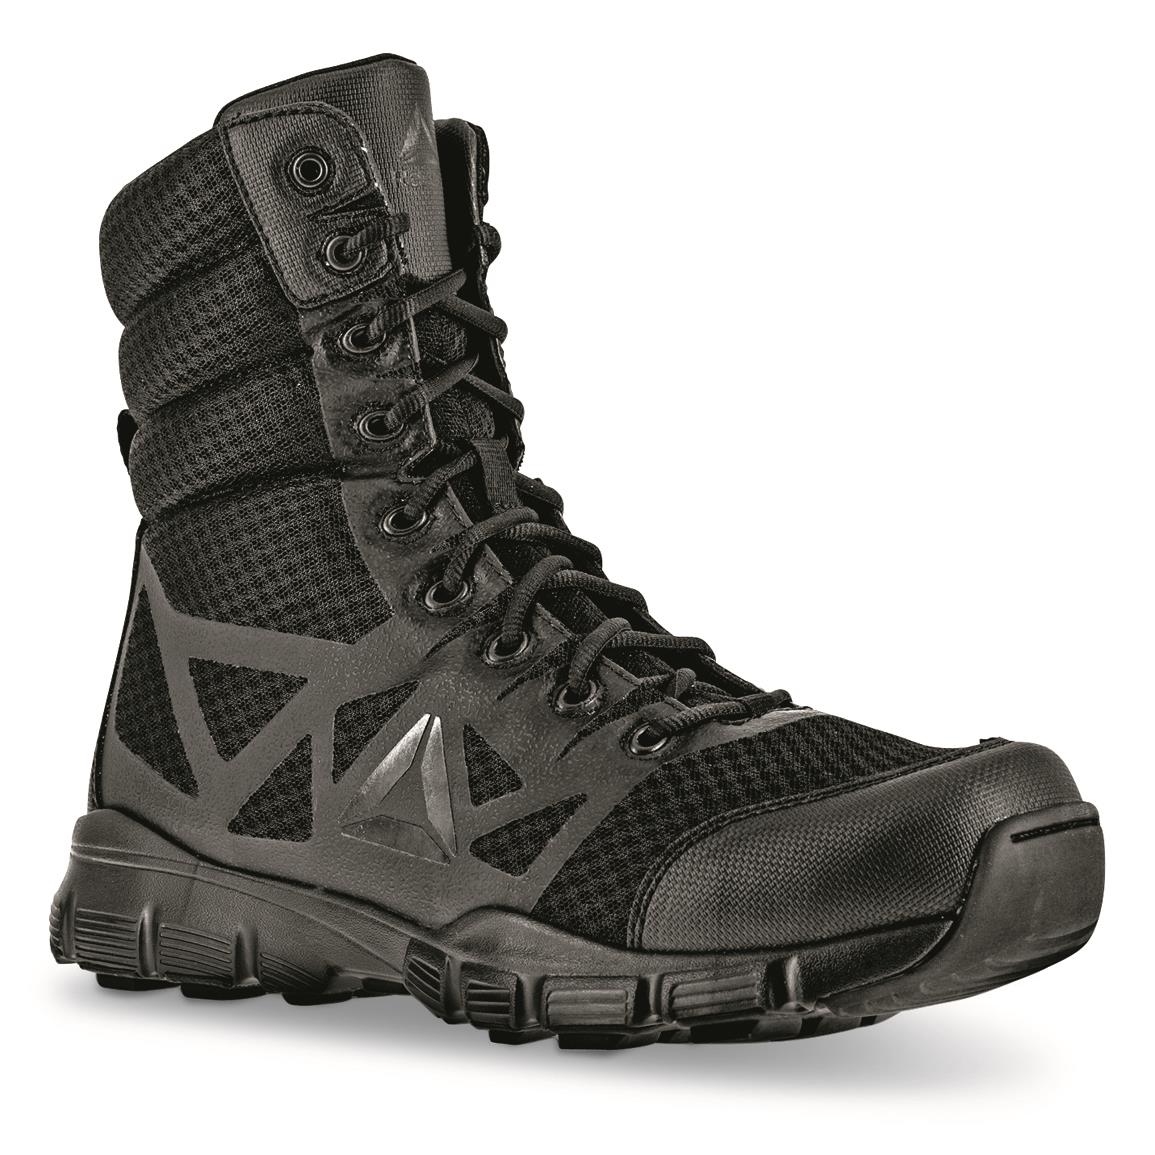 Reebok Men's 8" Dauntless Ultra Light Side-zip Tactical Boots, Black